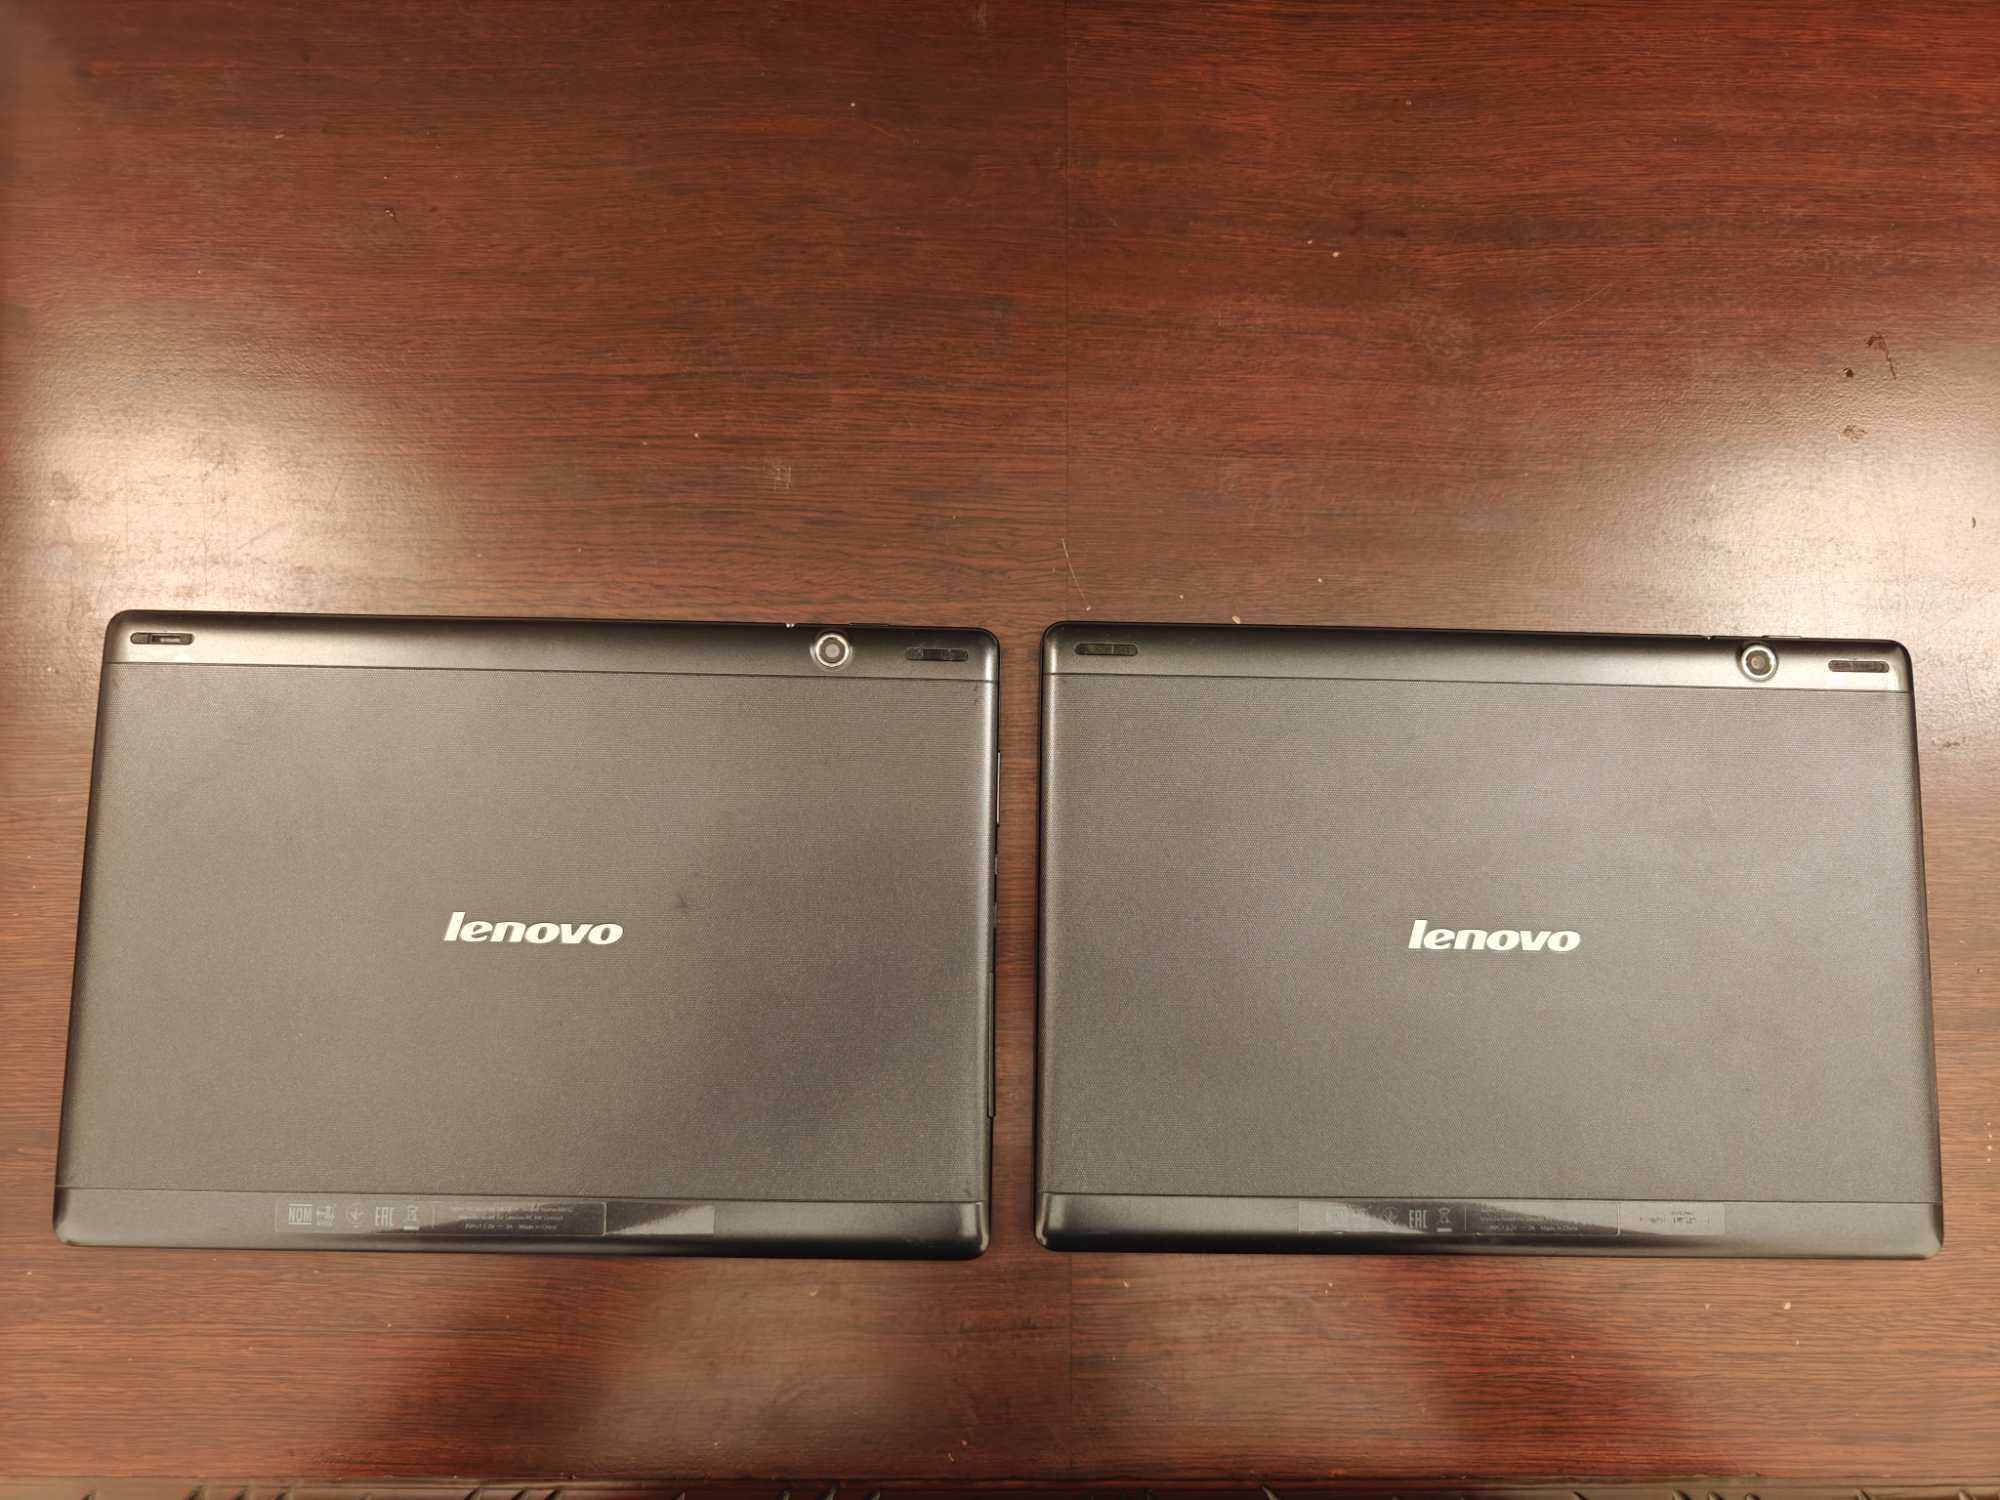 Планшет Lenovo IdeaTab S6000 3G 16GB Black (59368581)